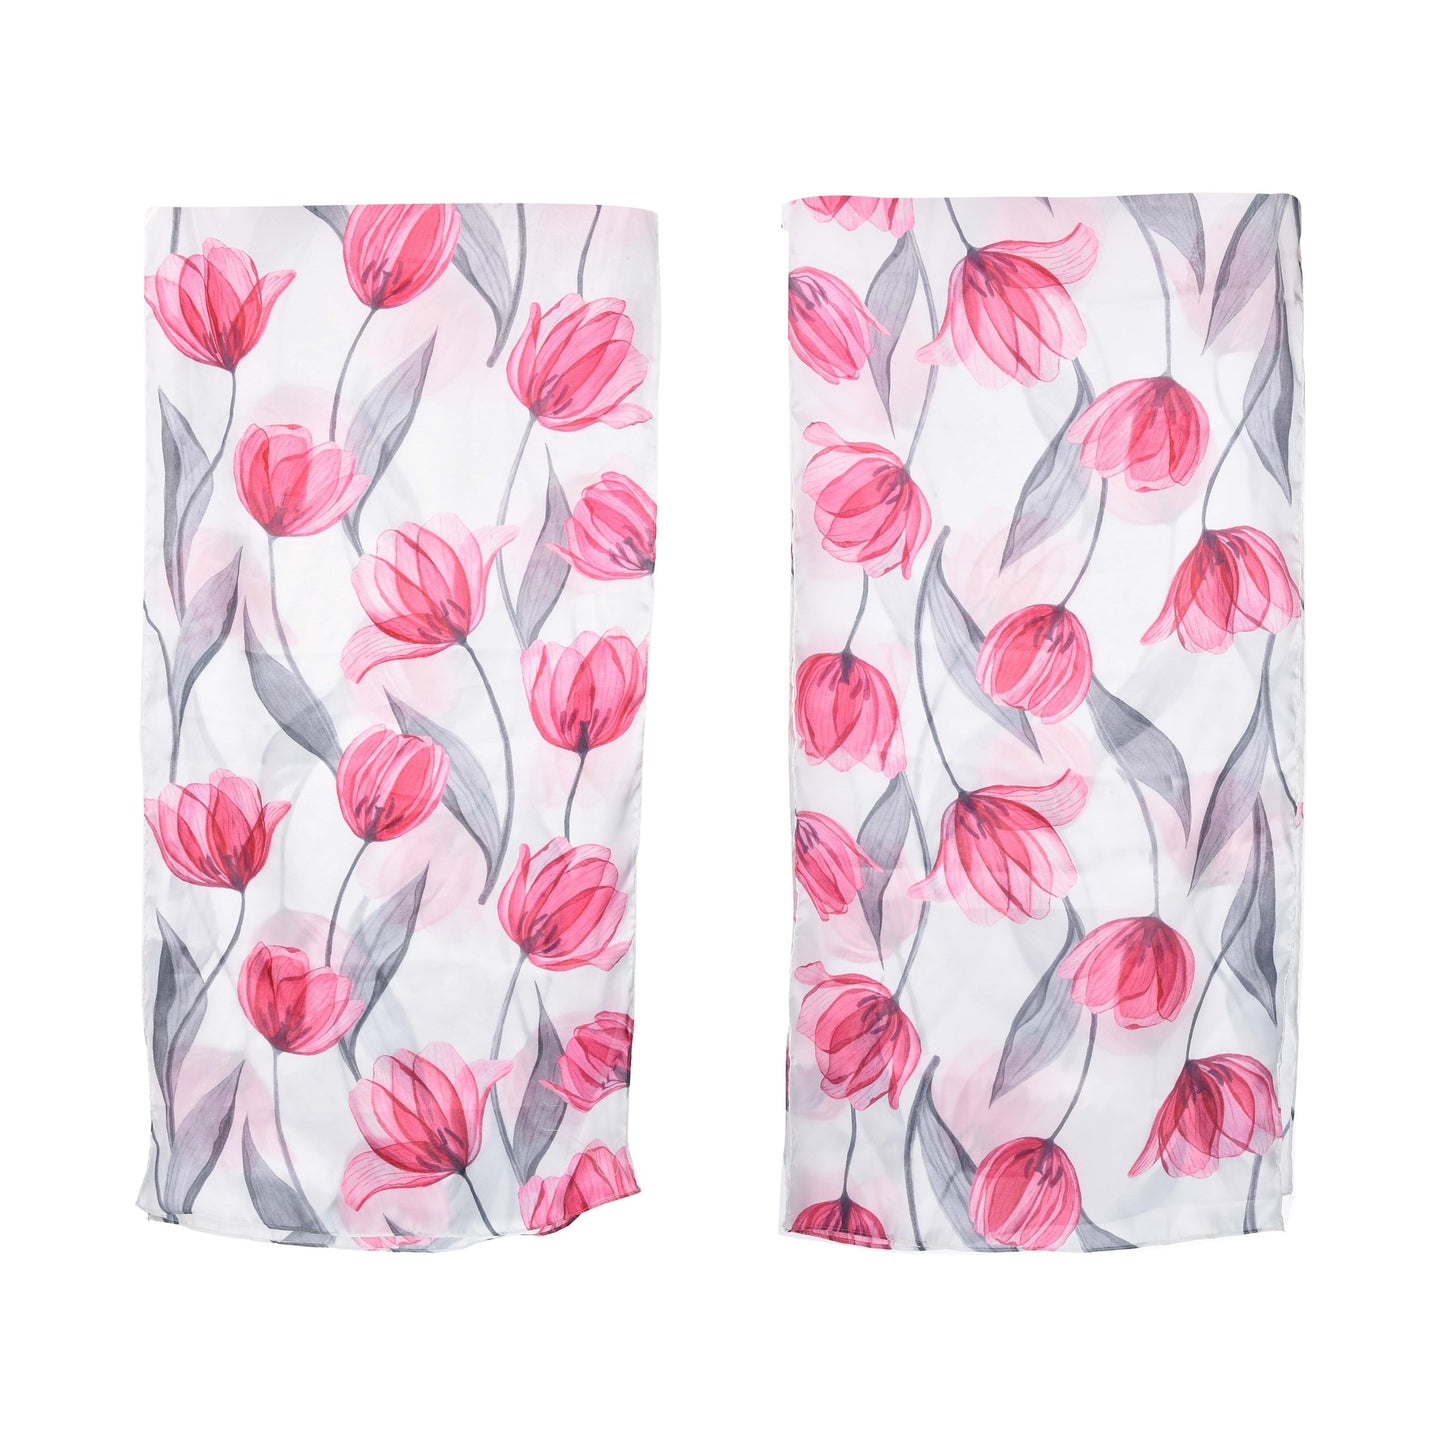 Fashion scarve - Tulips